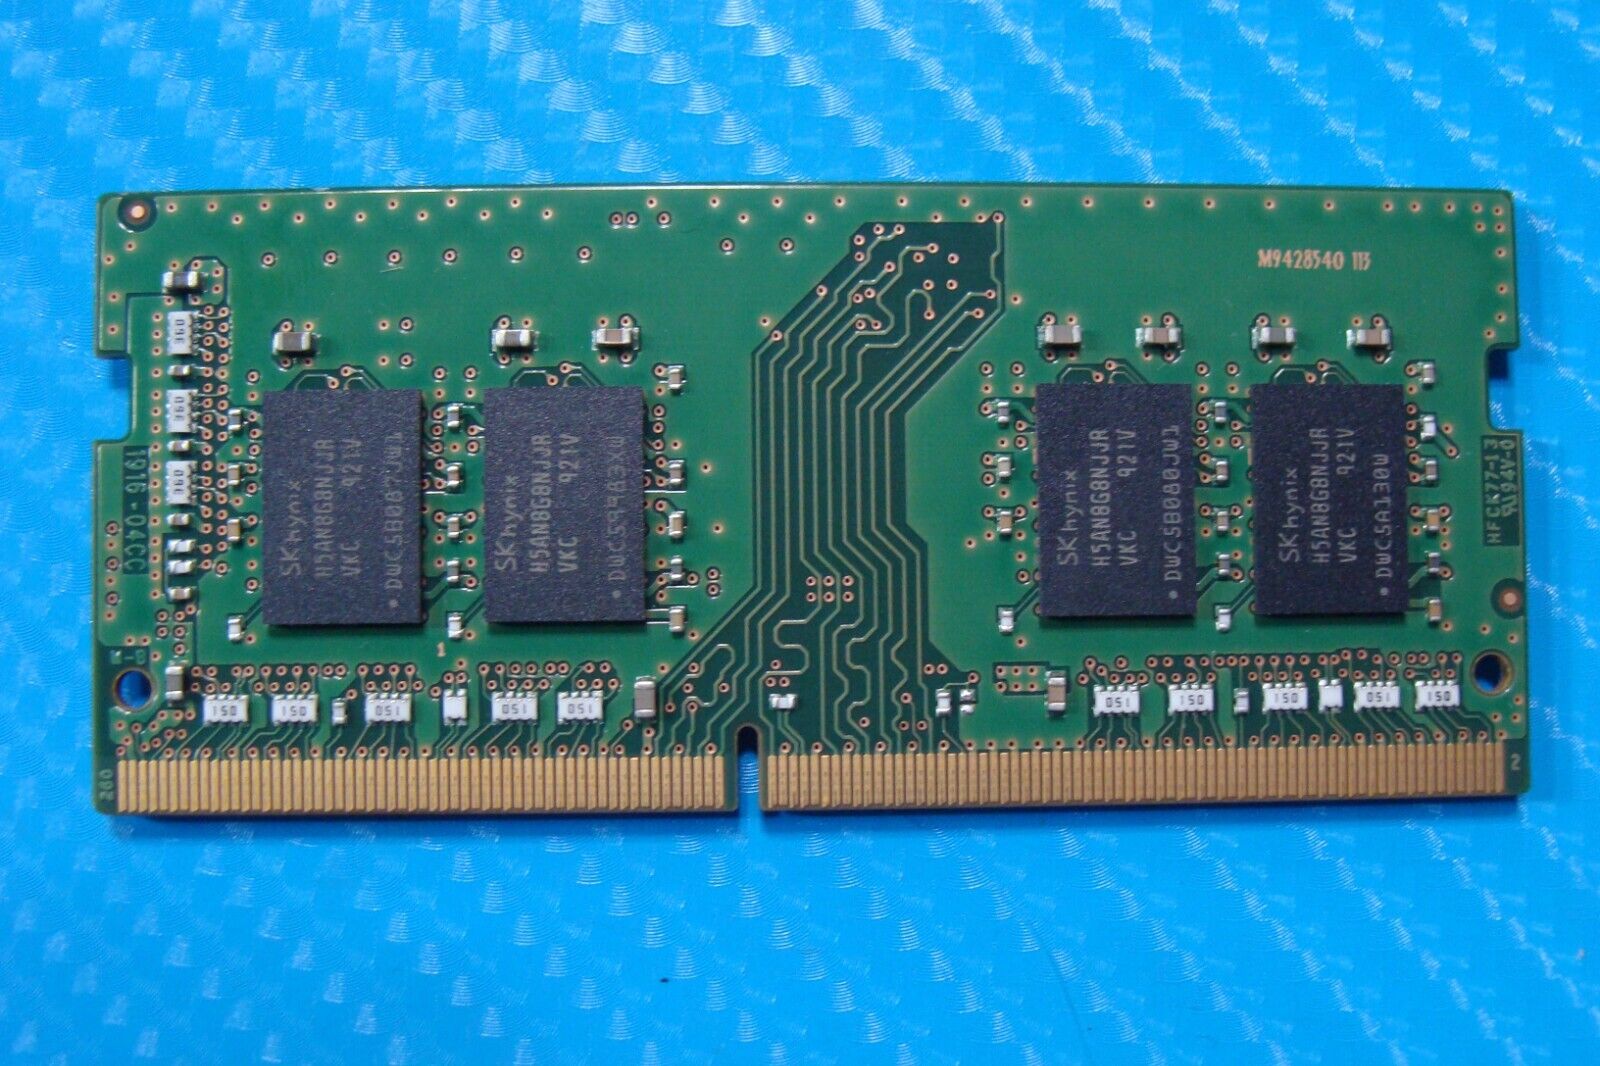 Dell 3583 SK Hynix 8GB 1Rx8 PC4-3200AA Memory RAM SO-DIMM HMA81GS6JJR8N-VK